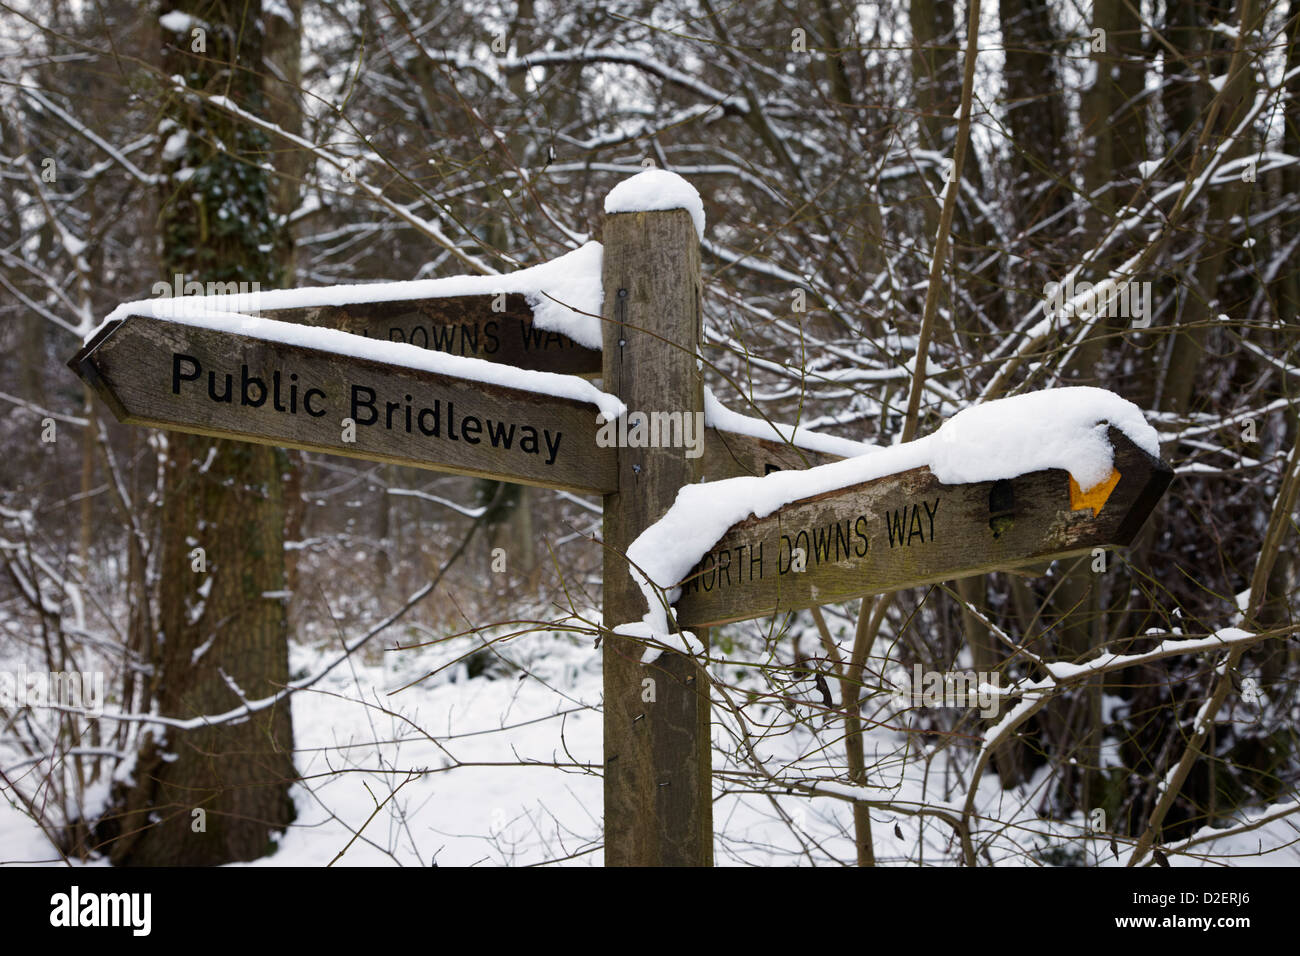 North Downs Way signpost in Ashcombe Wood, near Dorking, Surrey, England. Stock Photo